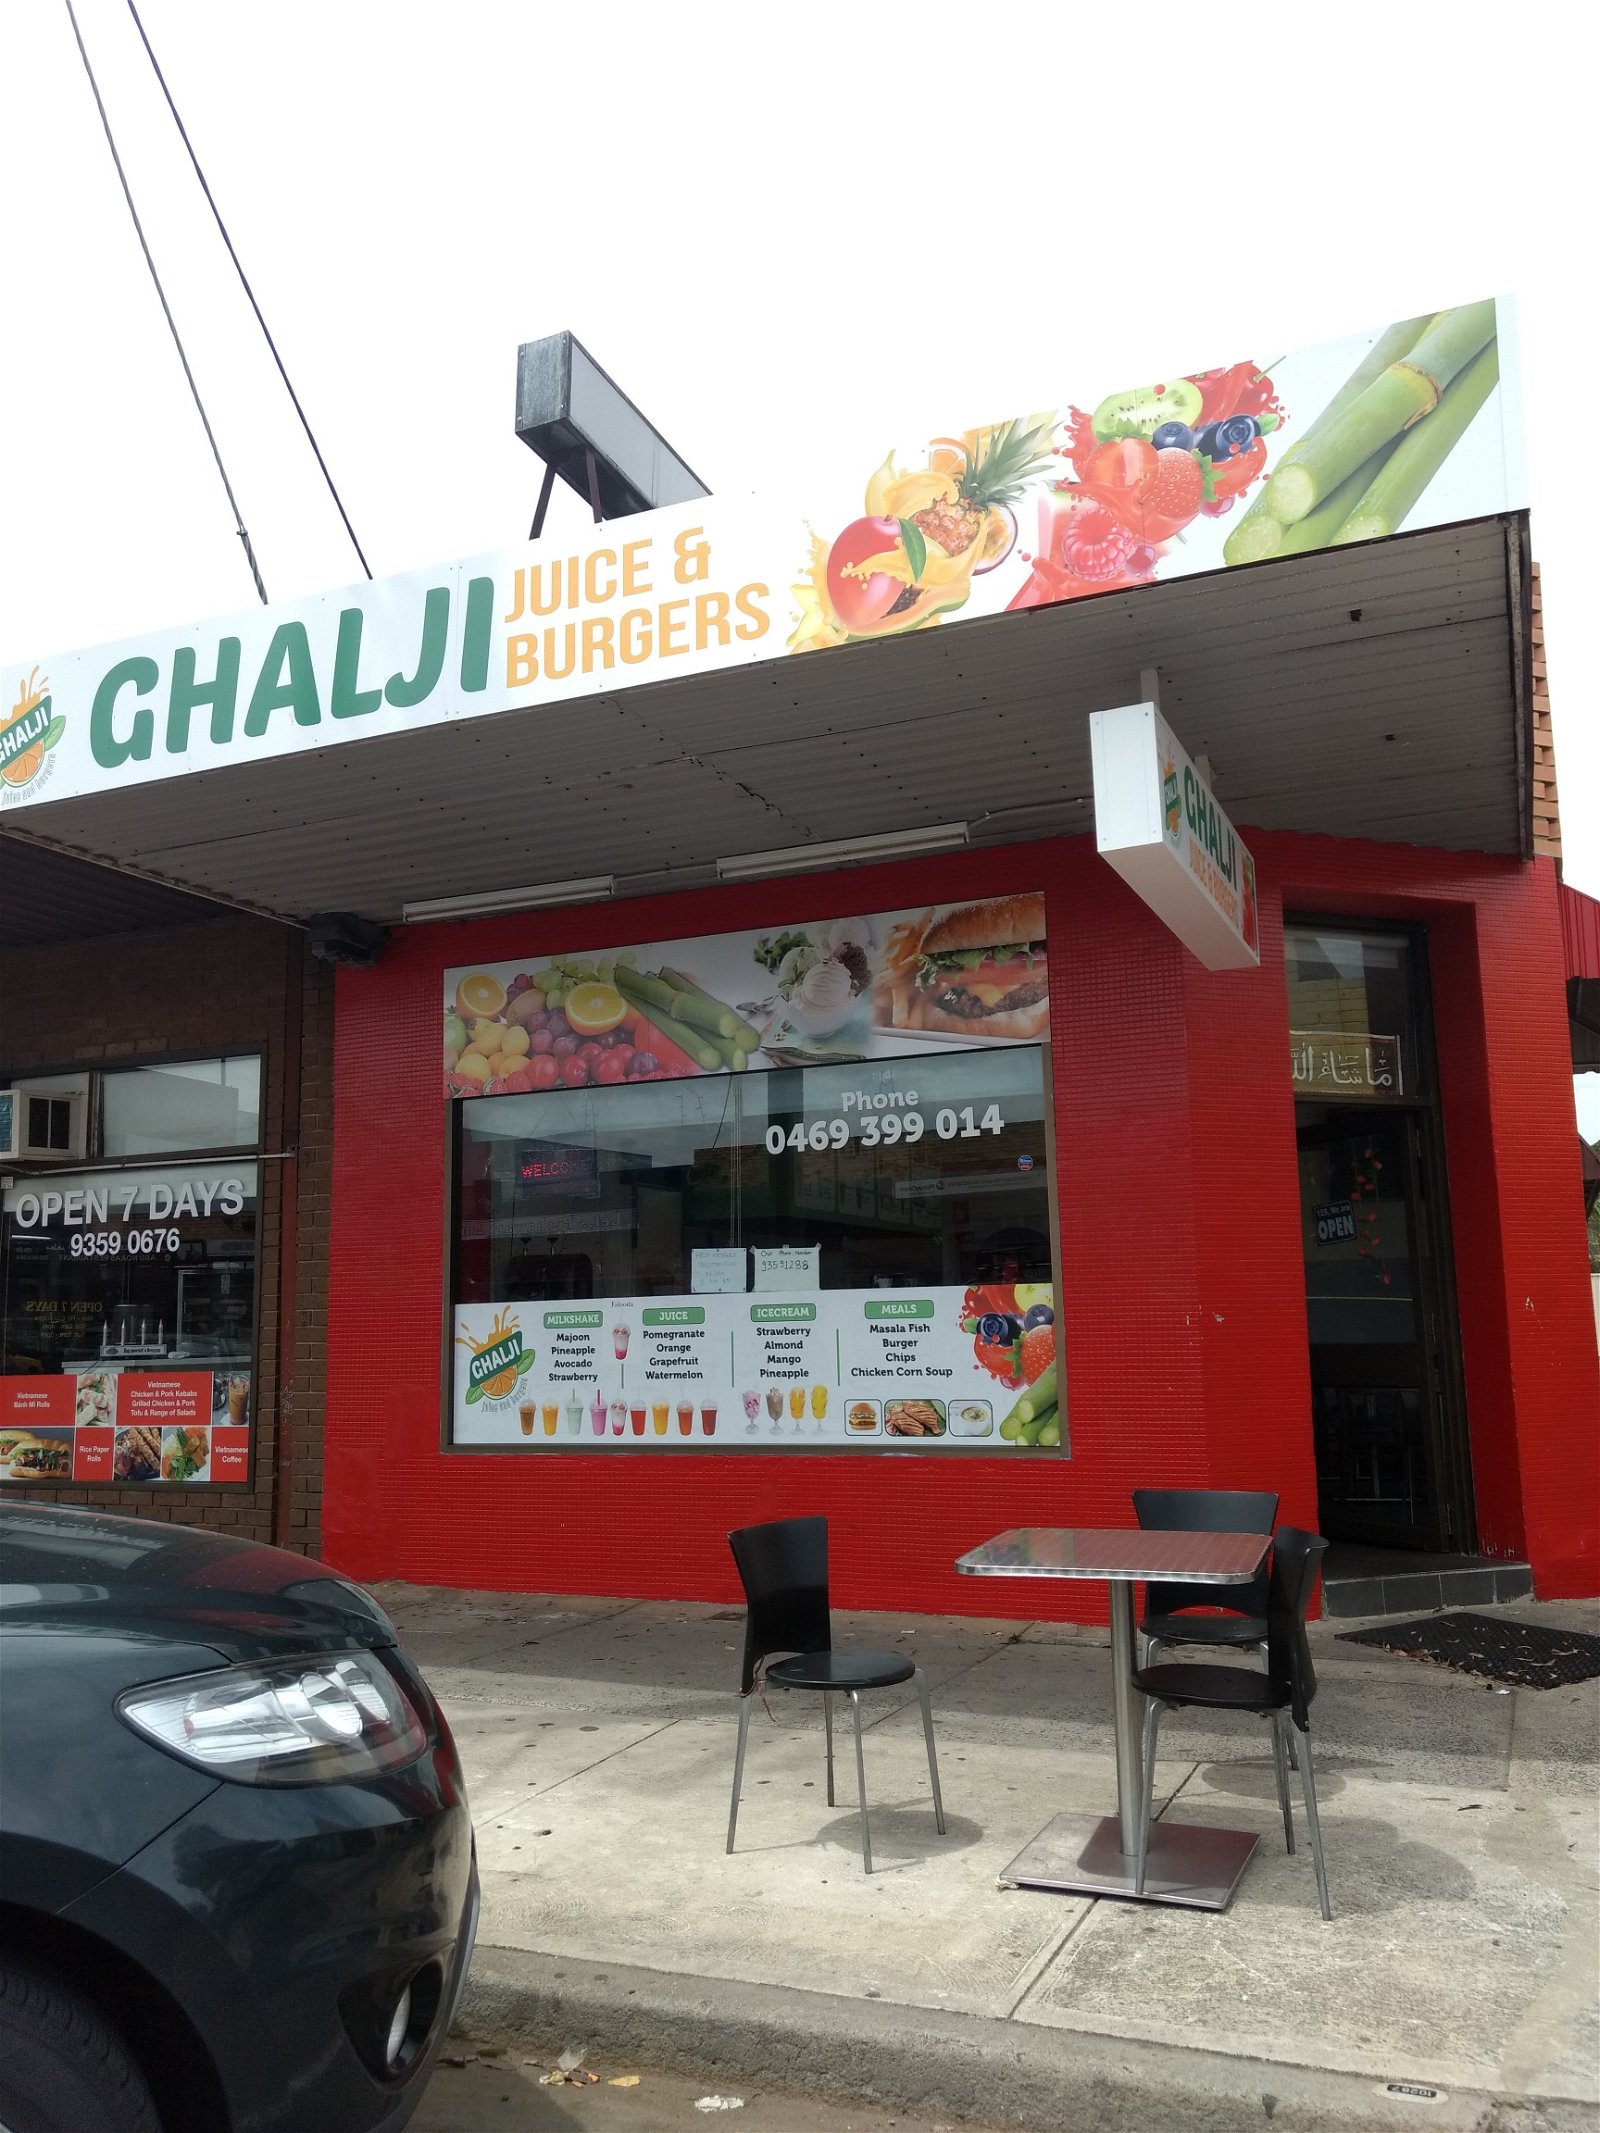 Ghalji Juice  Burgers - Northern Rivers Accommodation